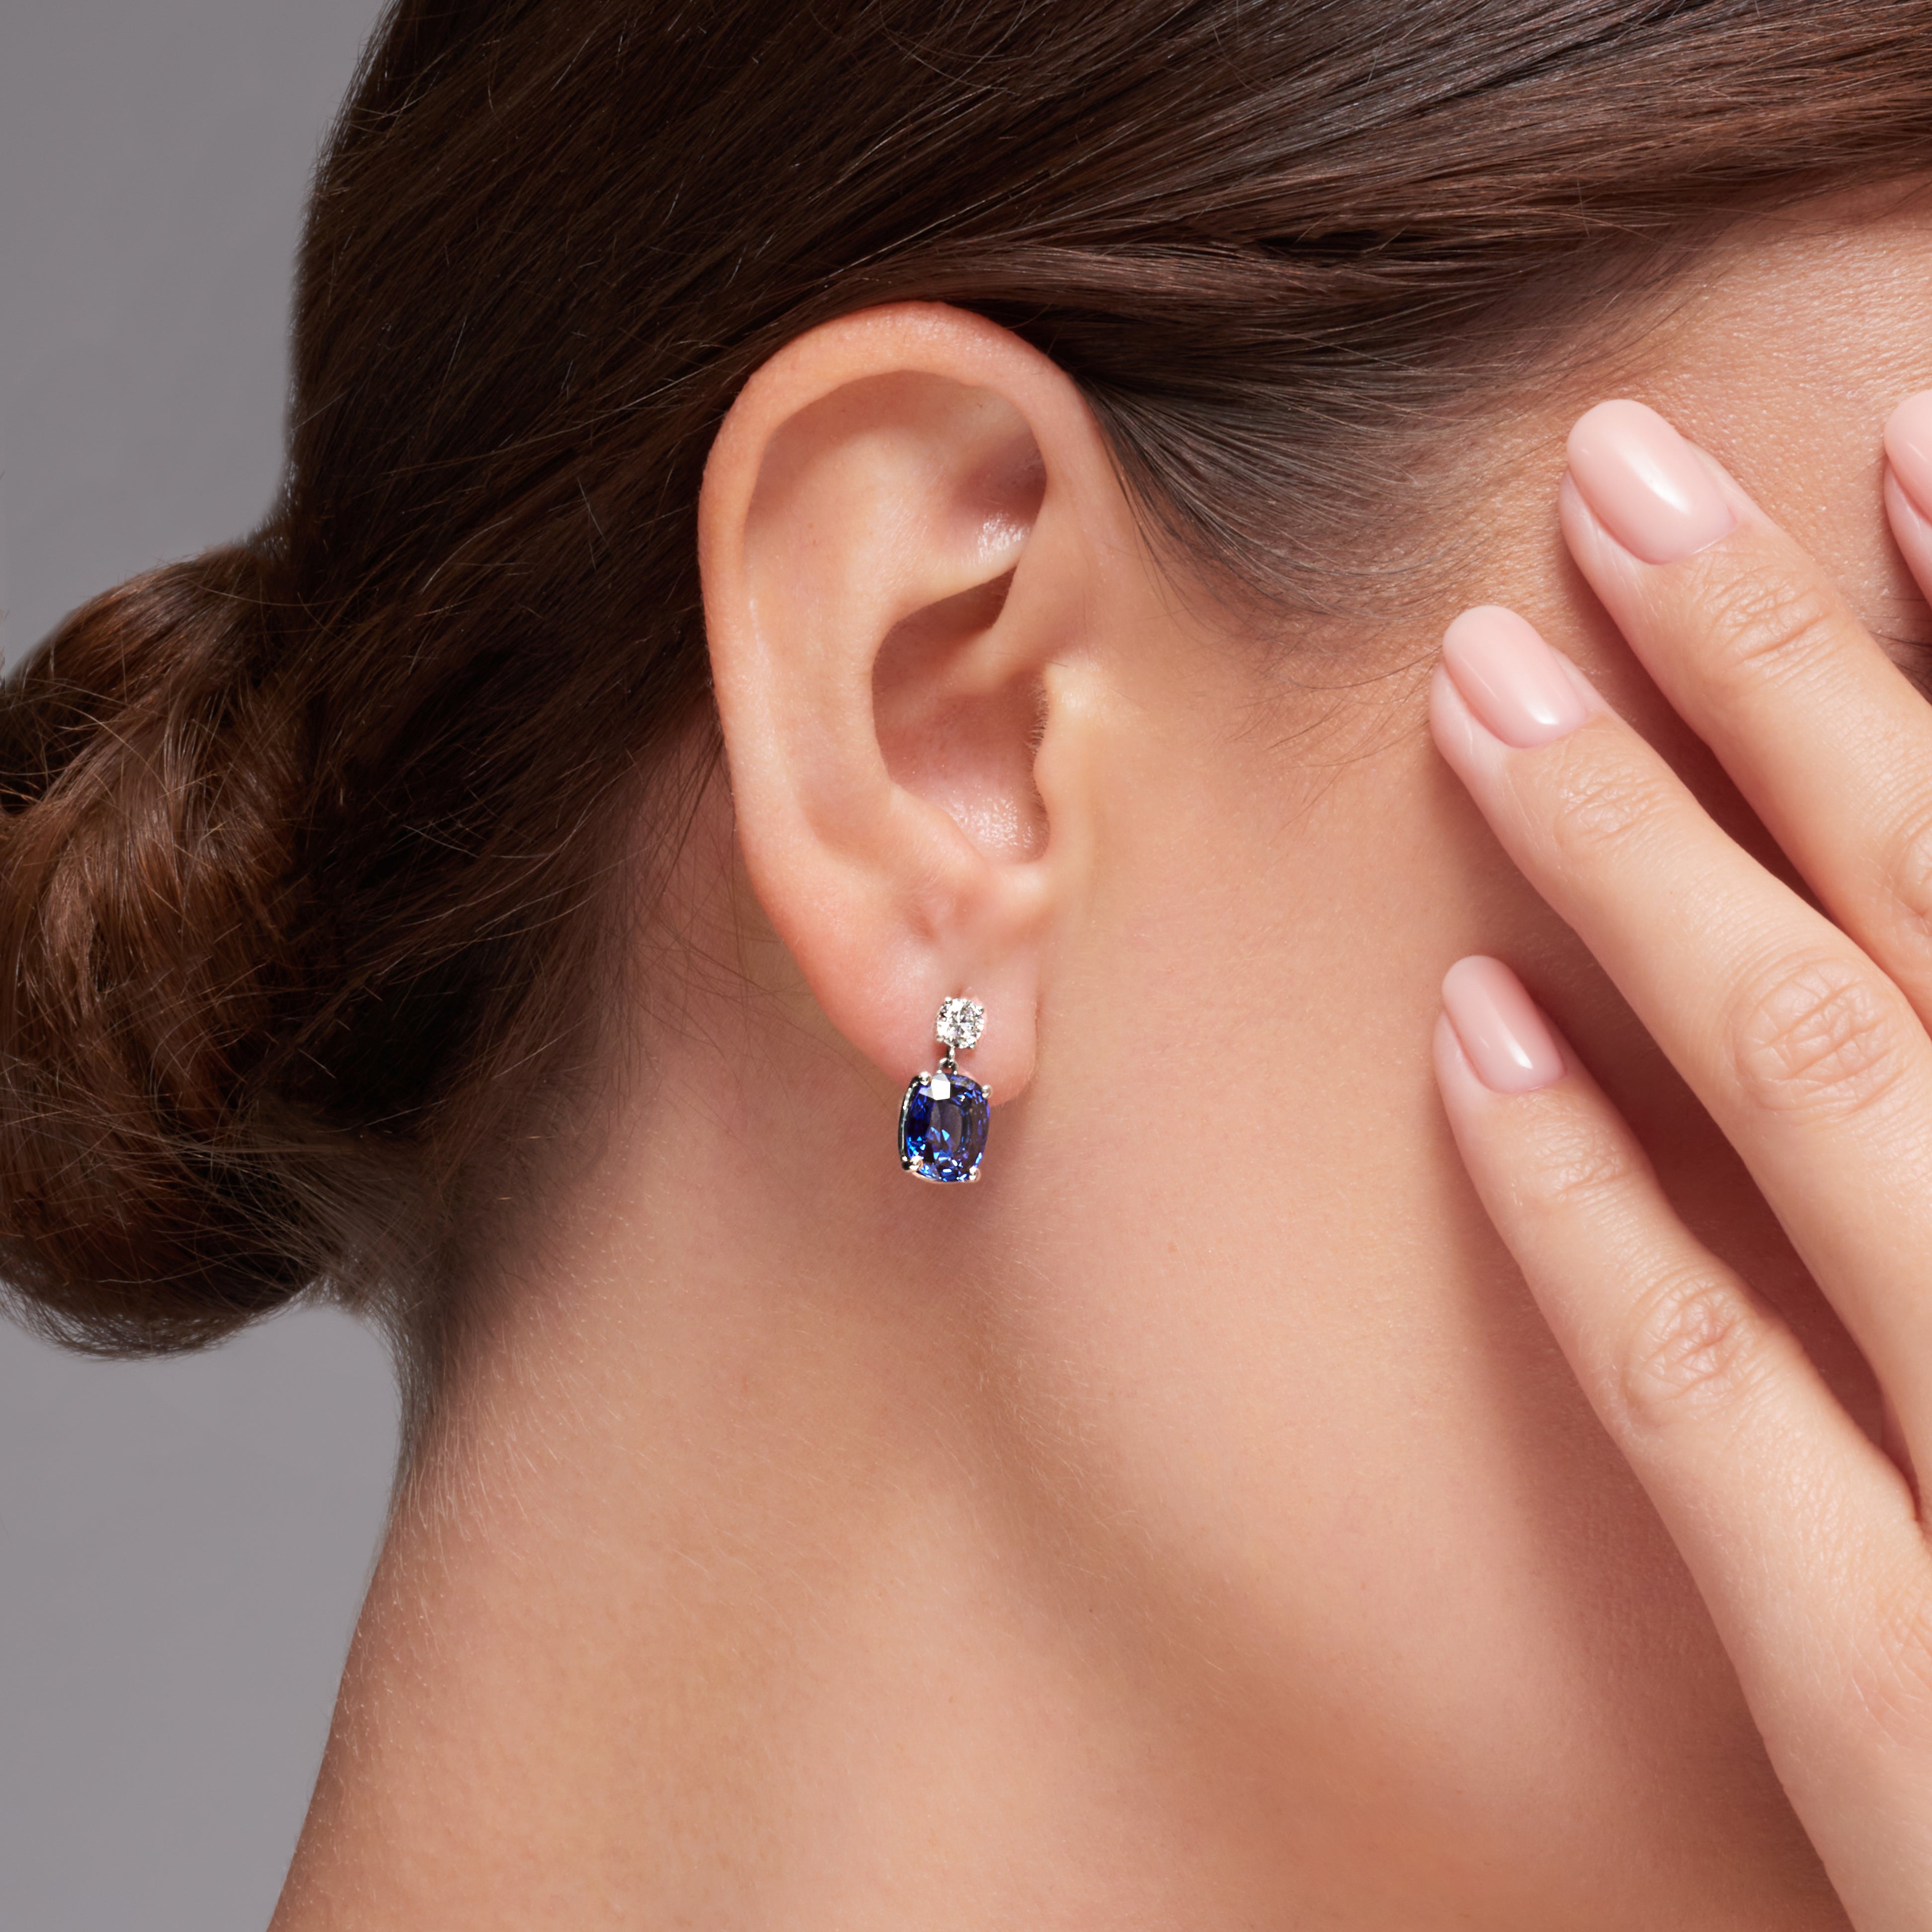 Blue Sapphire And Diamond Dangling Earrings In 18 Karat White Gold